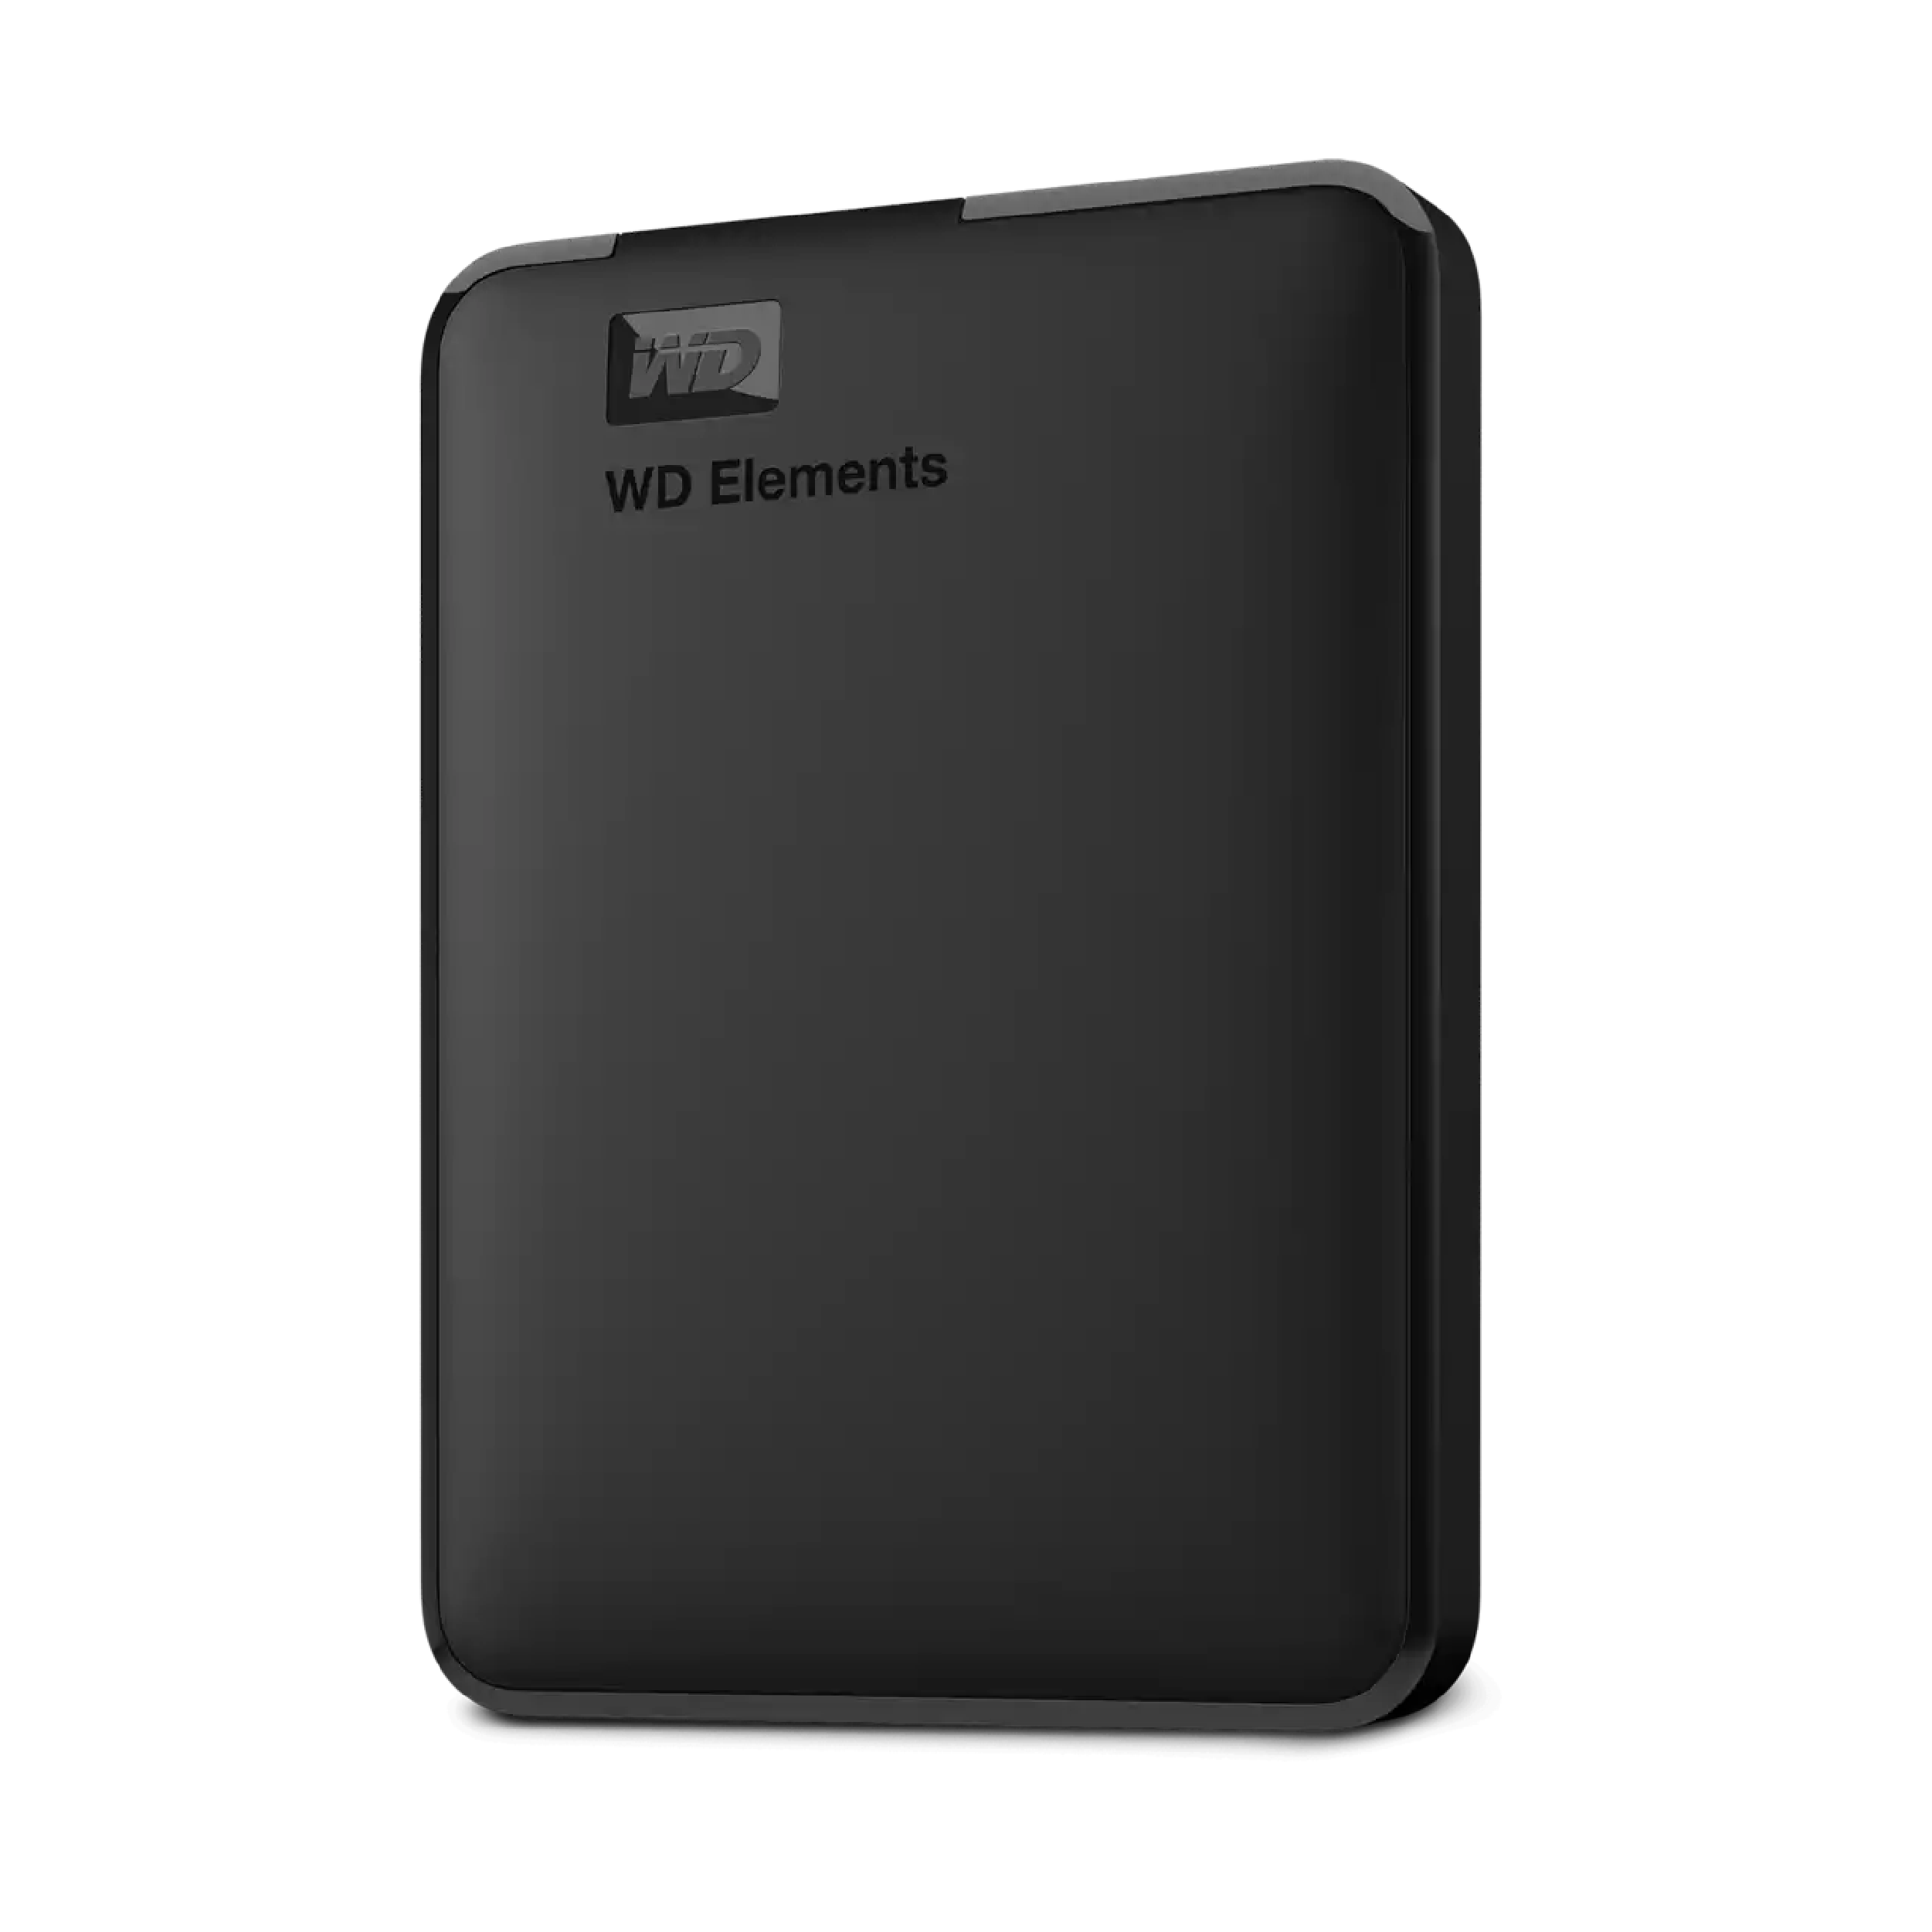 WD Elements Portable, 2TB, USB 3.0, External Hard Drive, Black (WDBU6Y0020BBK-WESN)